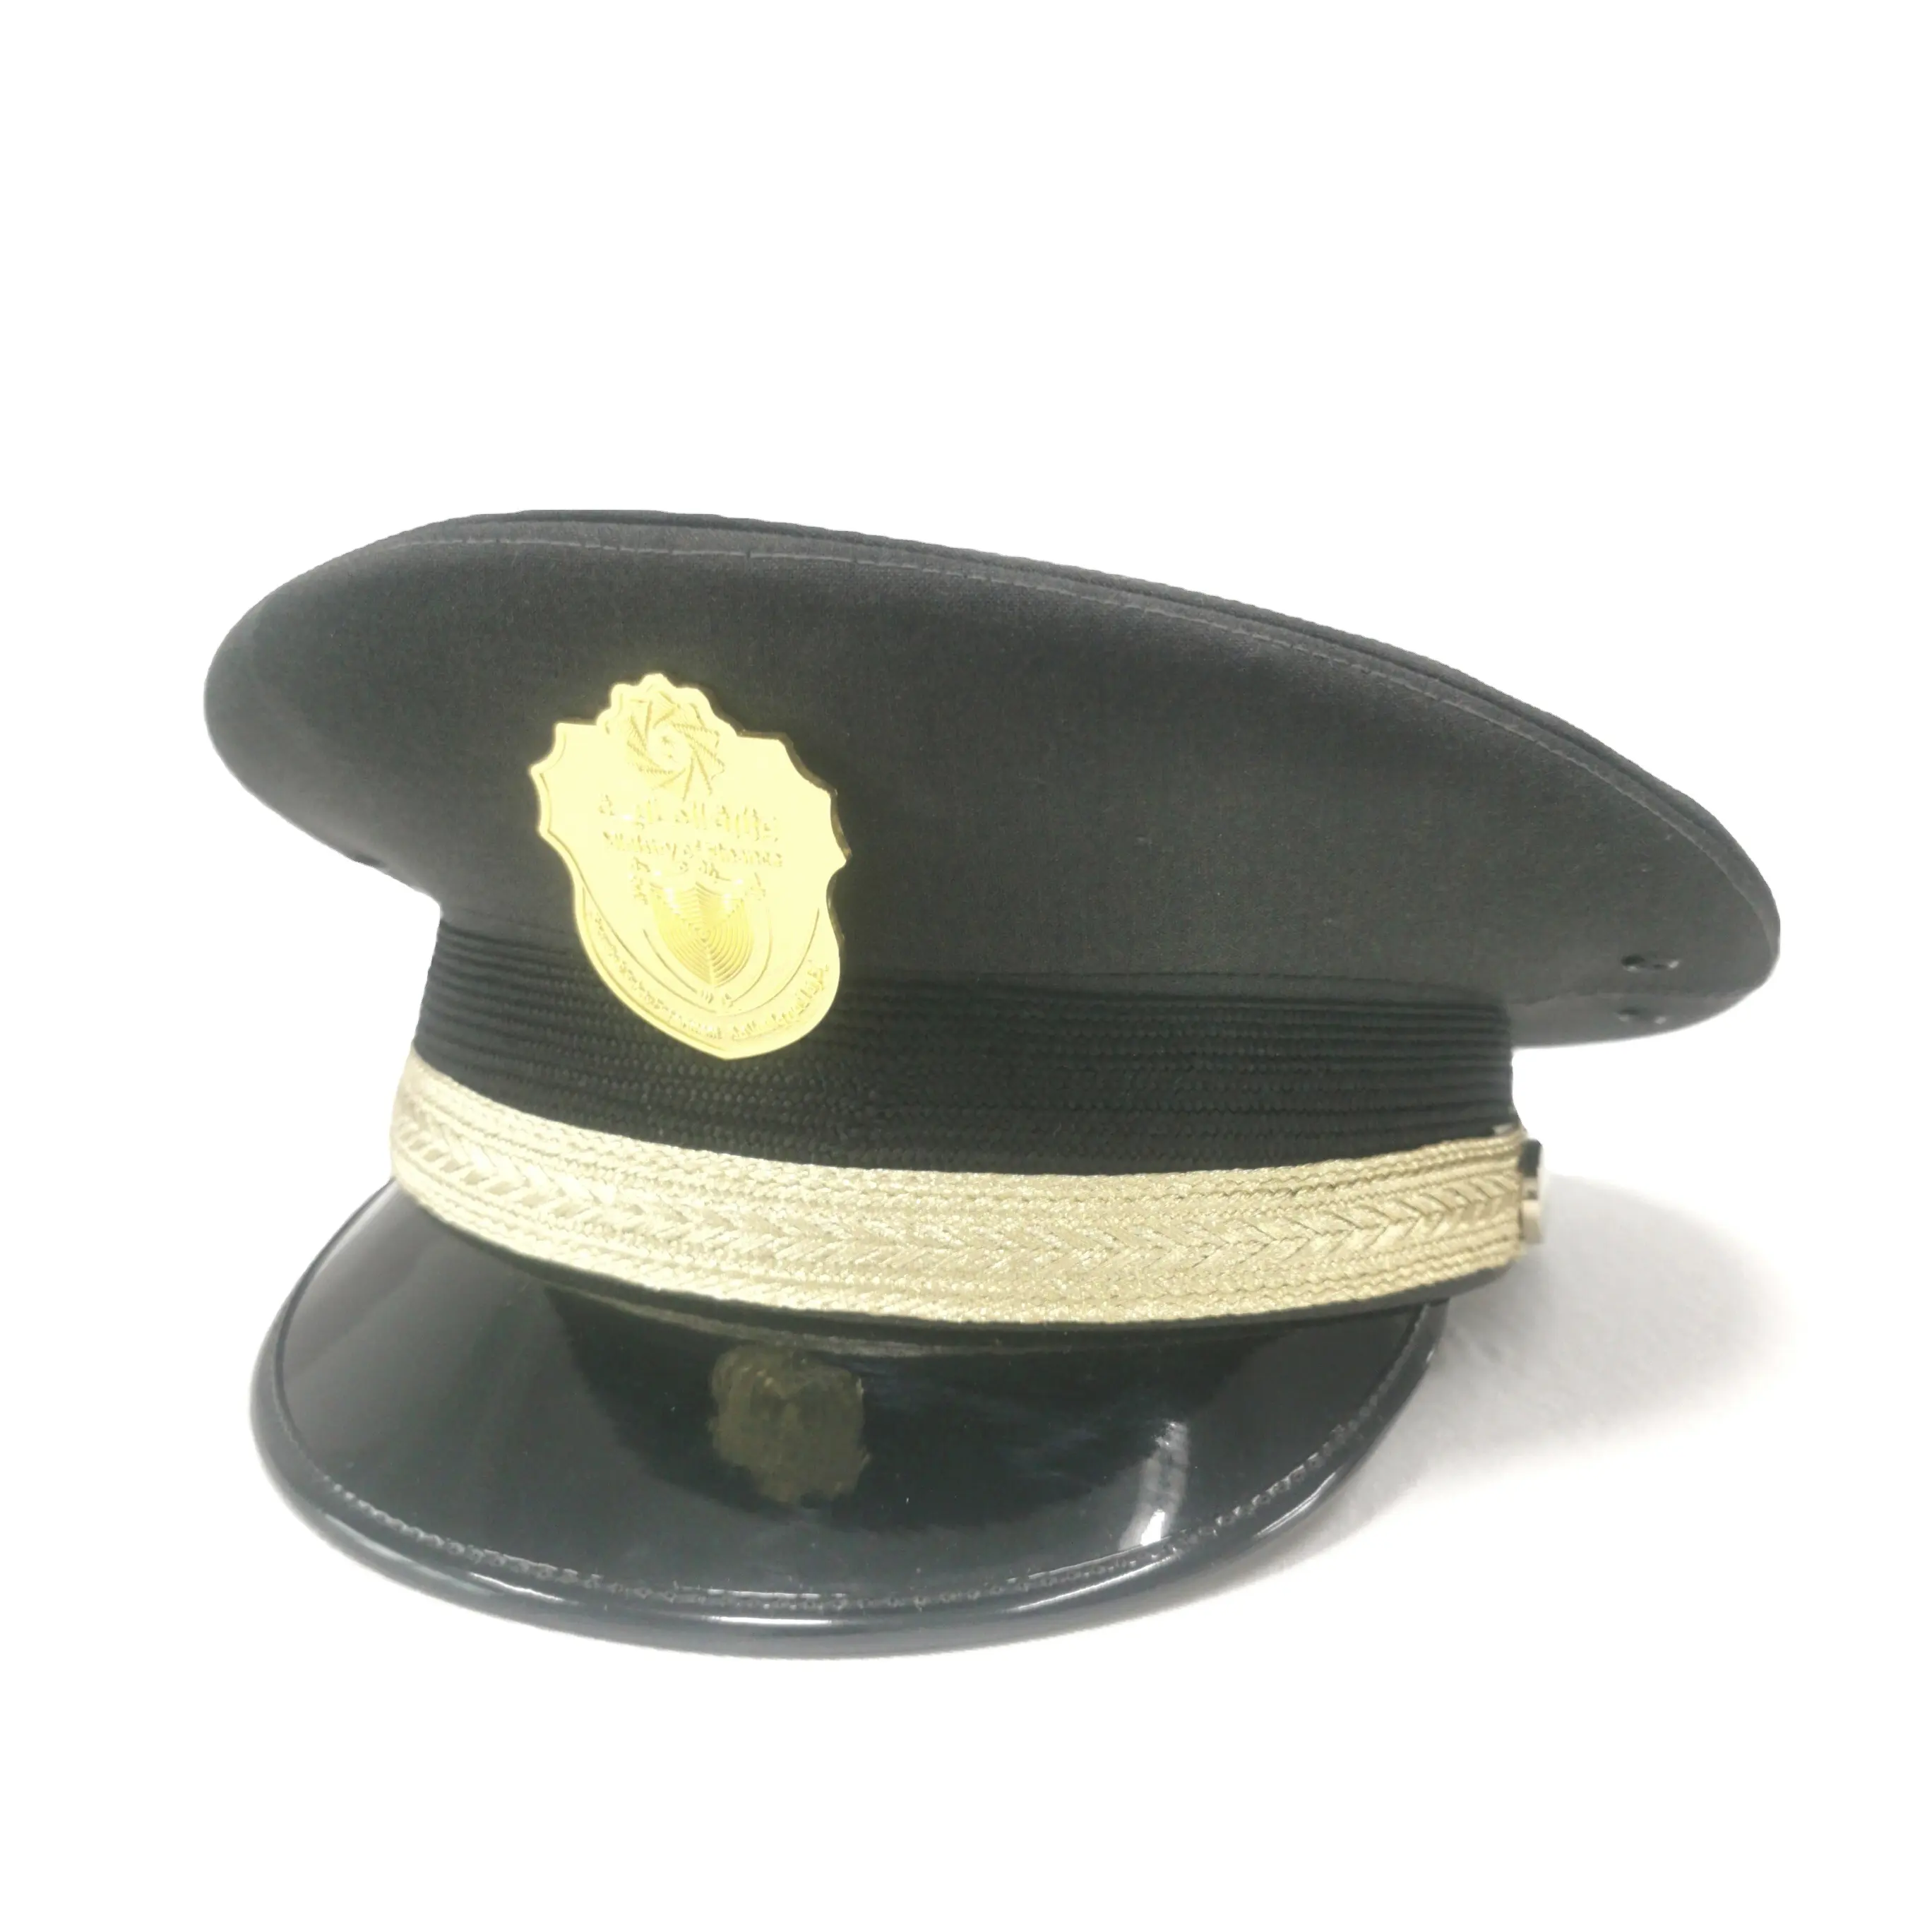 New Design Officer Visor Cap Flight Captain Pilot Peak Cap With Metal Badge